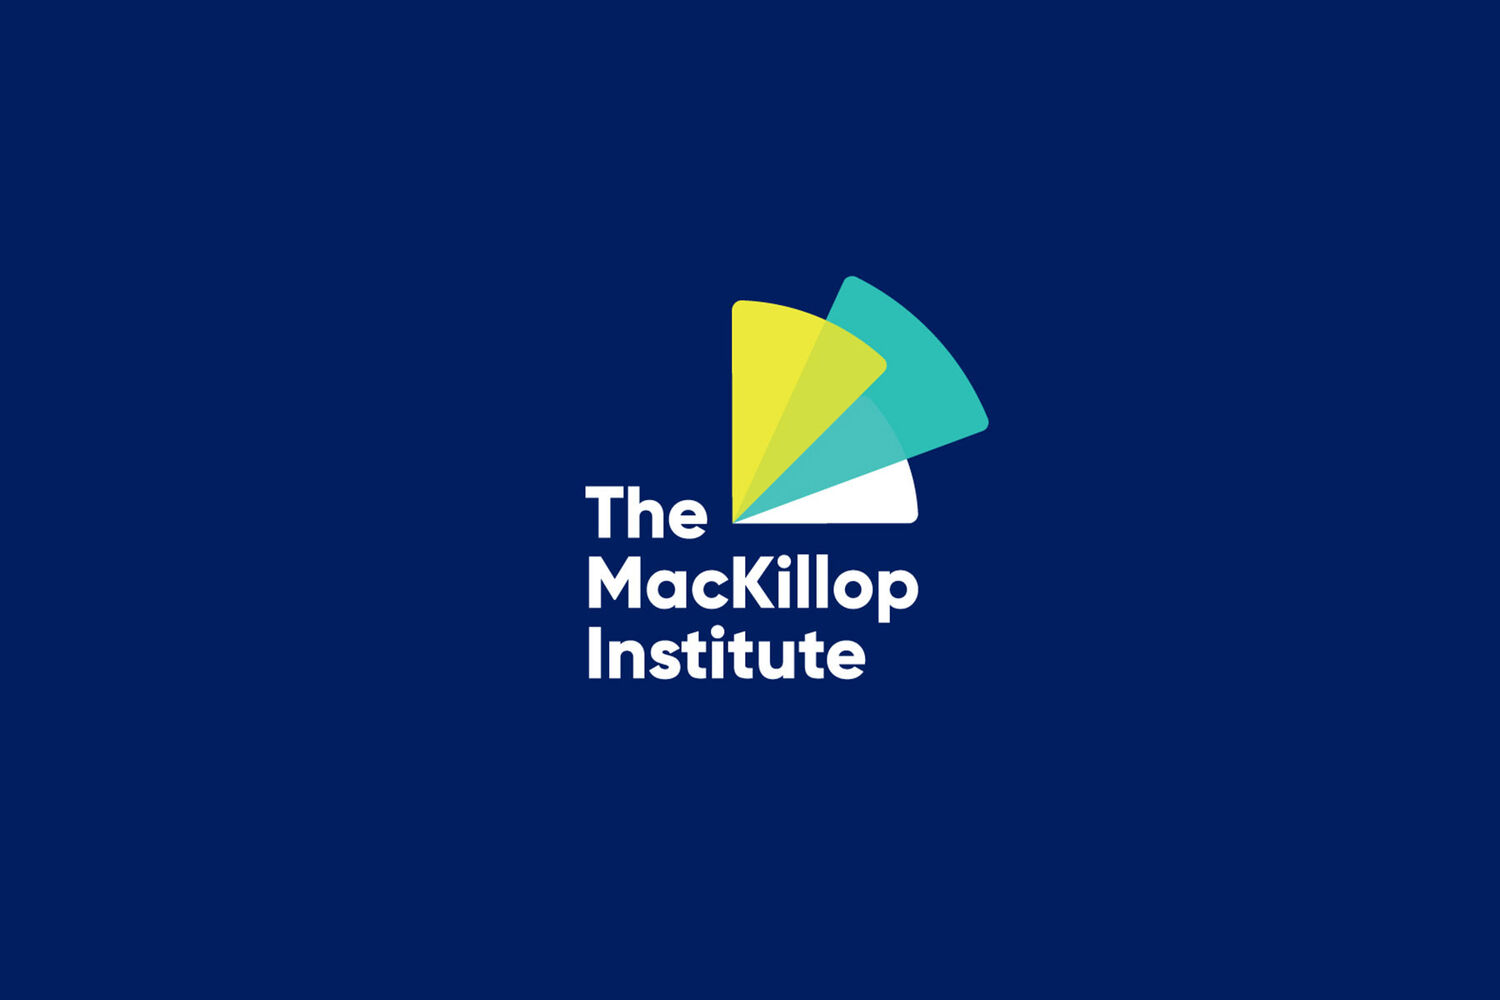 Mackillop Institute Logo Banner Header